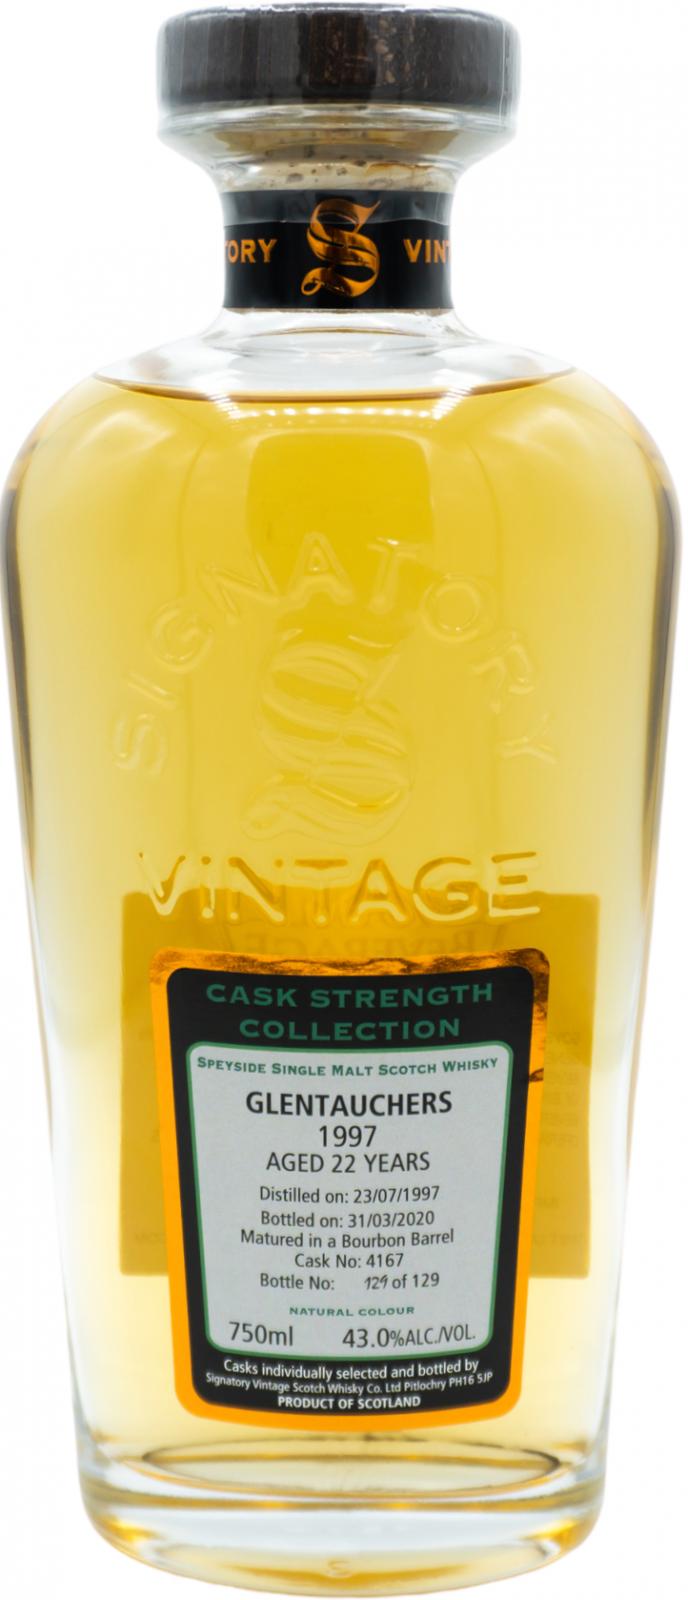 Glentauchers 1997 SV Cask Strength Collection Bourbon Barrel #4167 43% 750ml